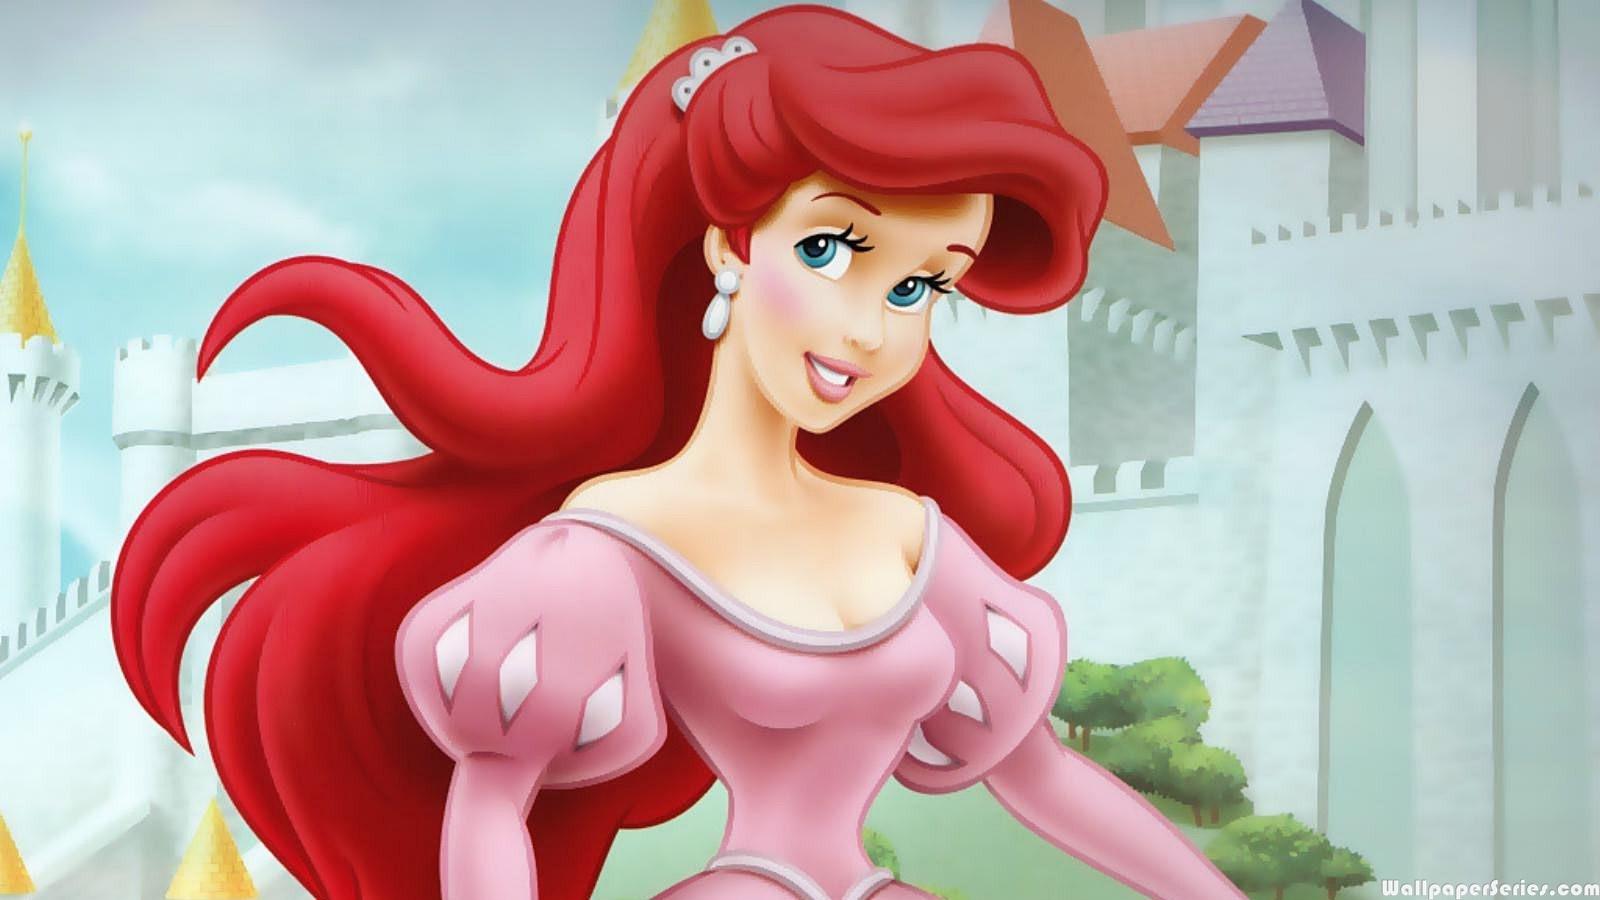 Hd Disney Princess Ariel Pink Dress Desktop Wallpaper